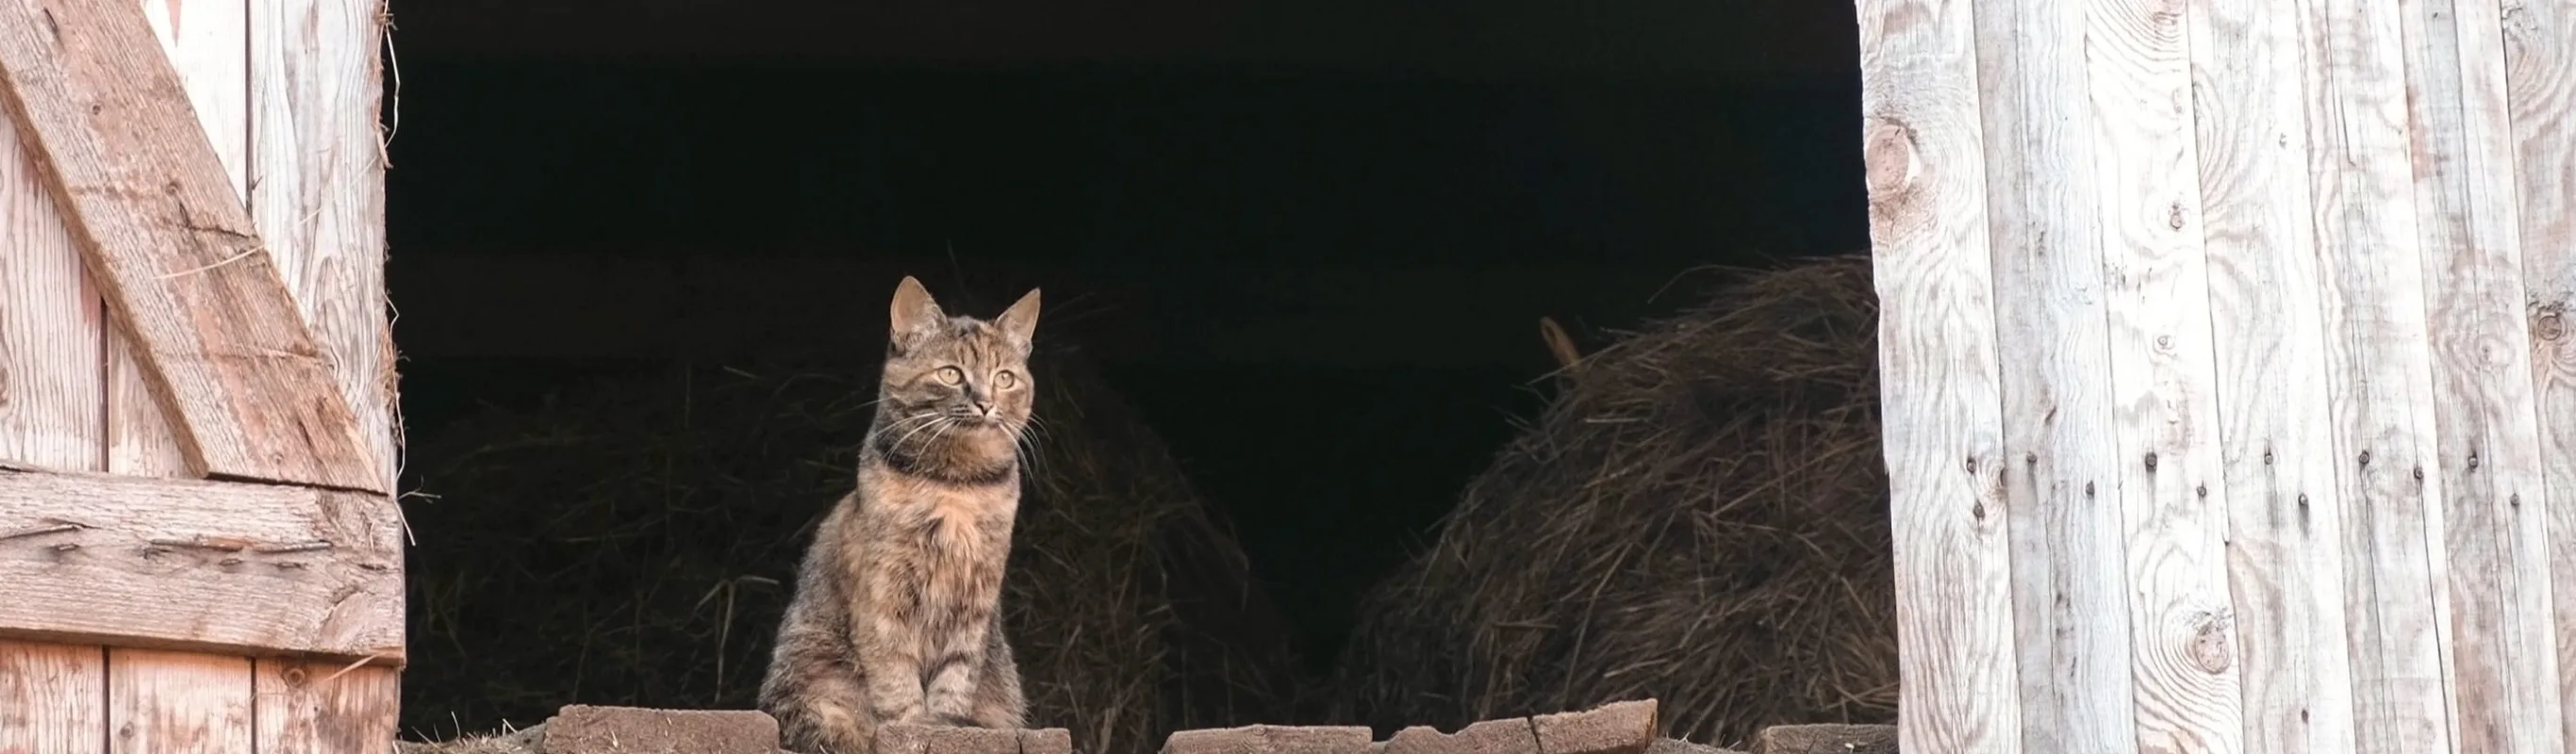 Cat in a barn